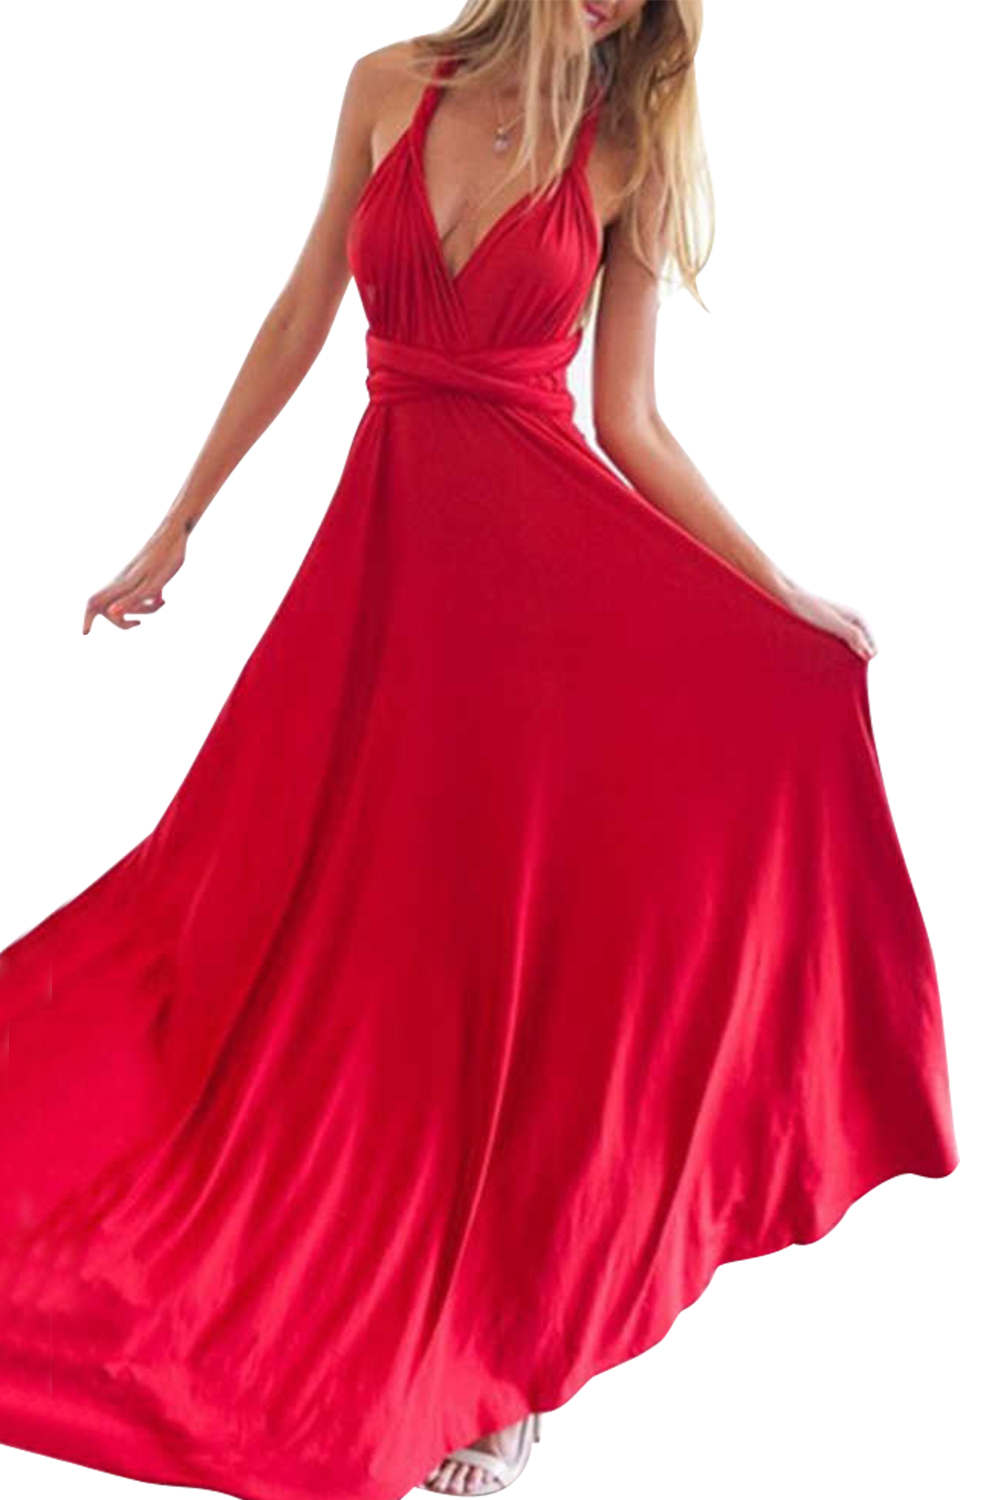 Iyasson Backless Front-Slit Long Prom Dress